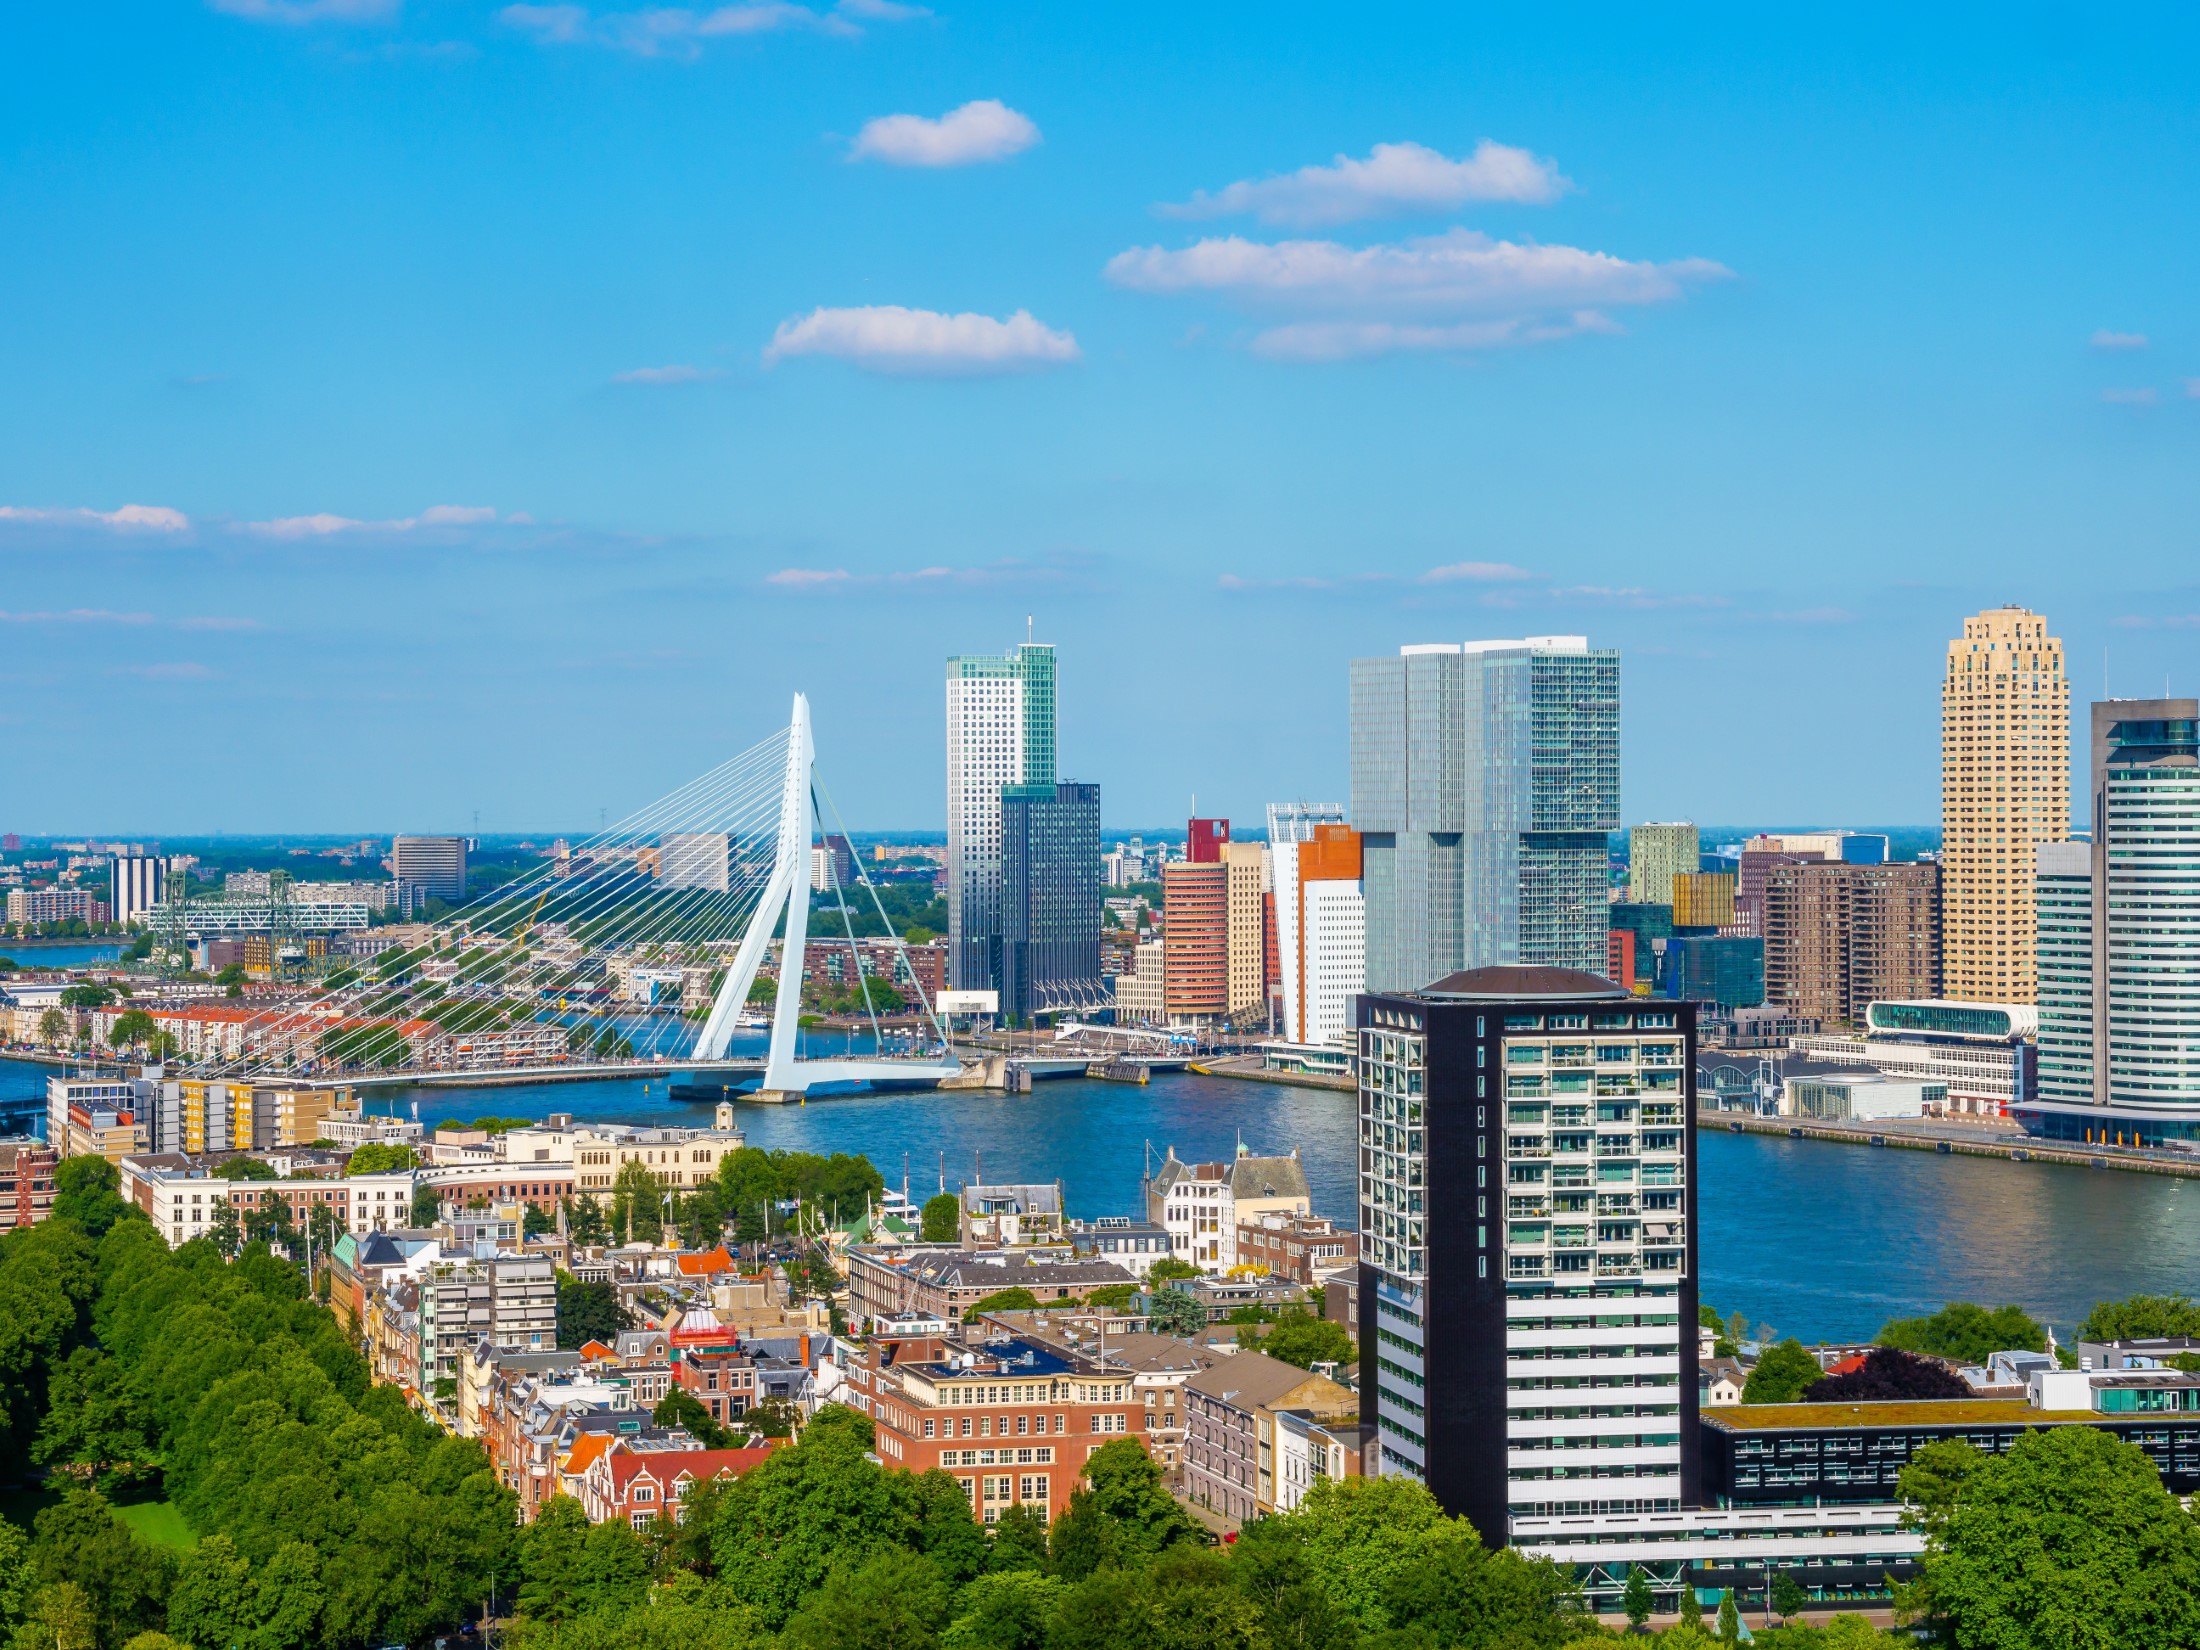 Widok na miasto Rotterdam w Holandii